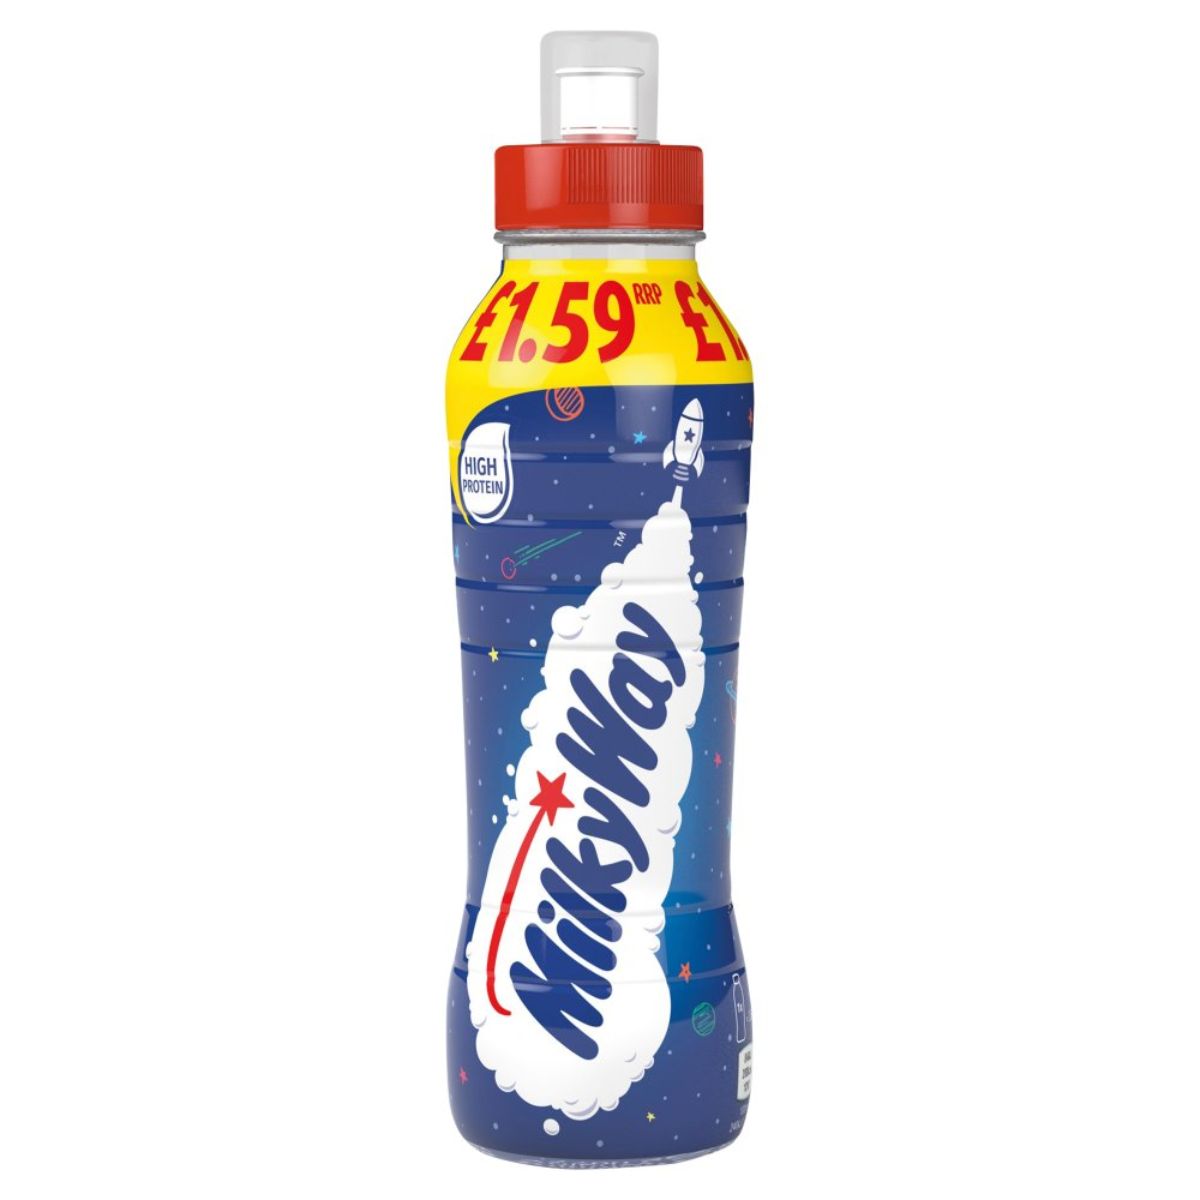 A bottle of Milky Way - Chocolate Milkshake Drink - 350ml on a white background.